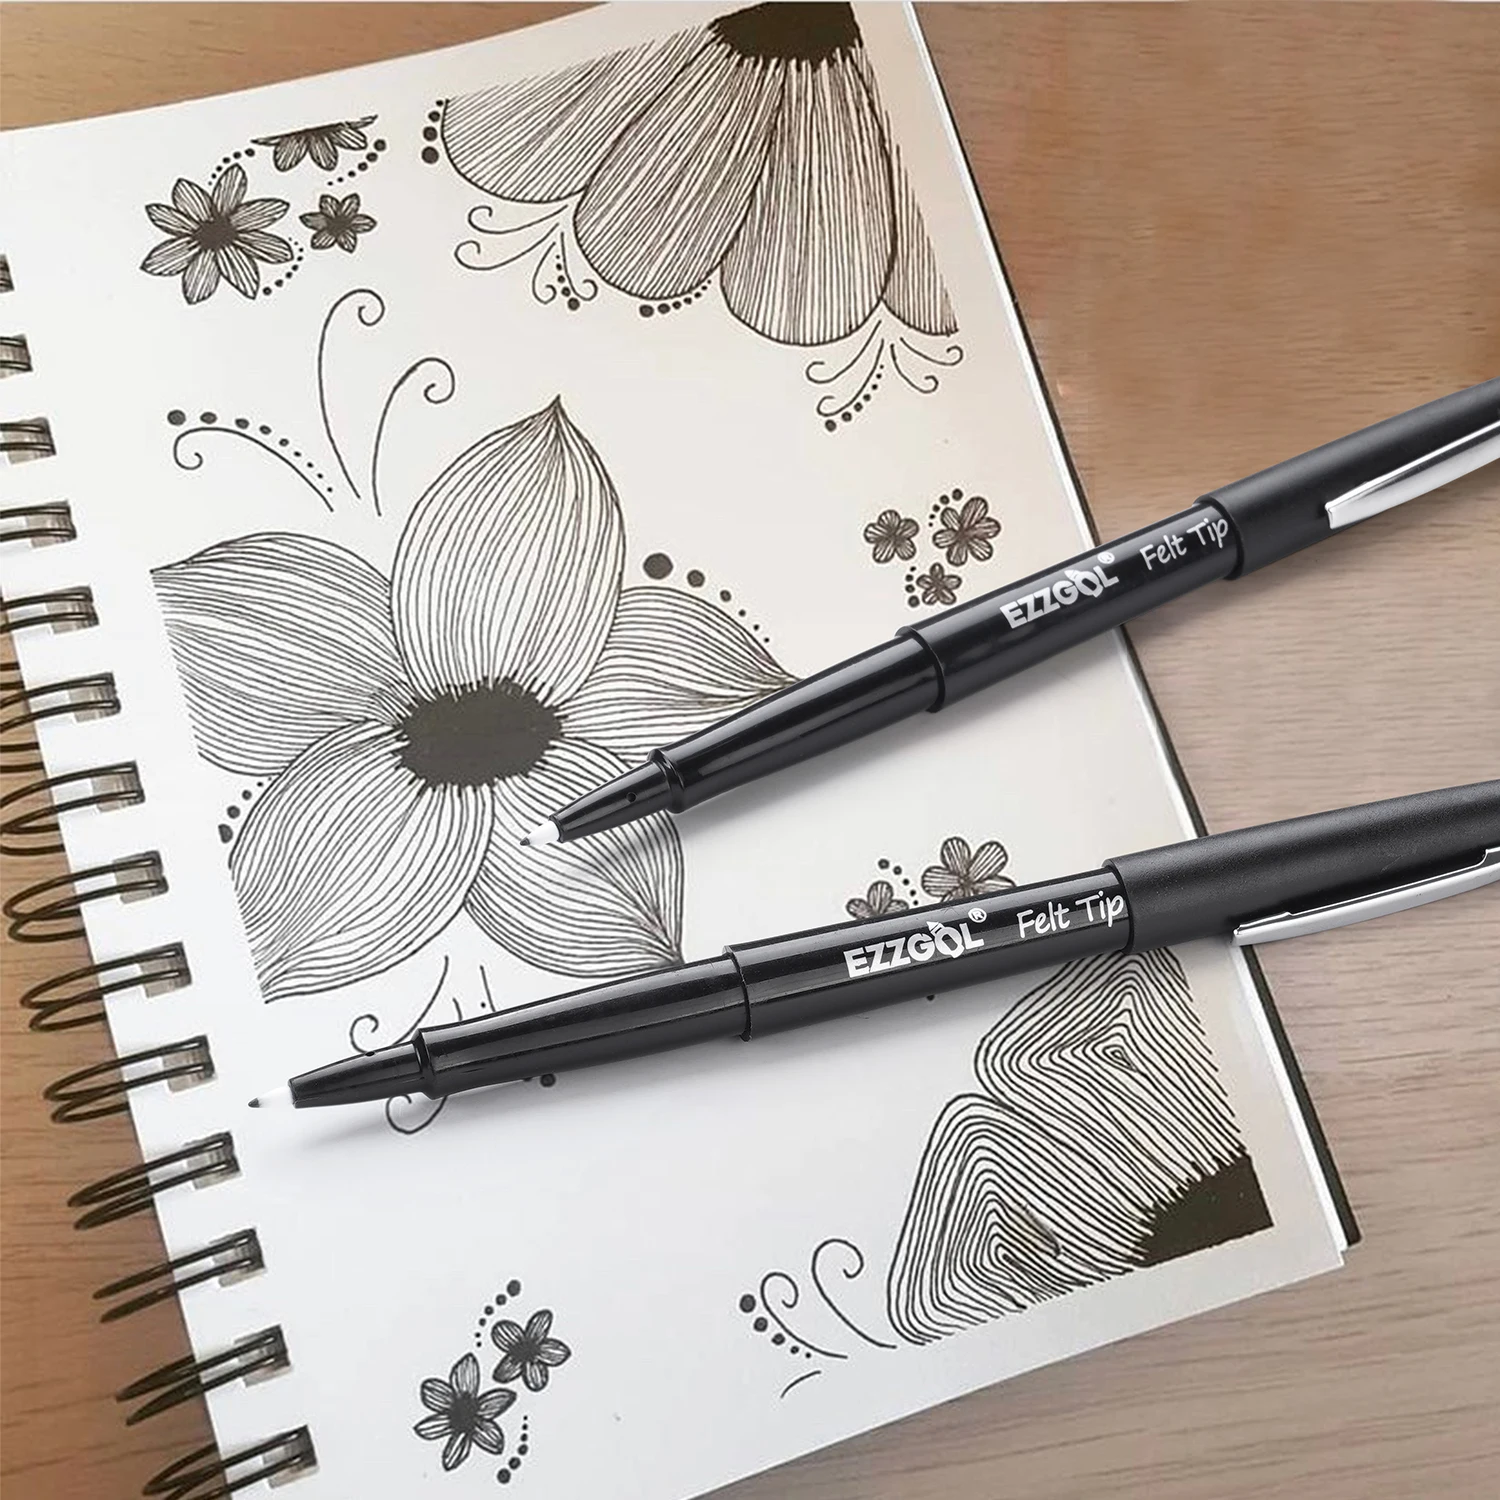 Ezzgol Black Felt Tip Pens, 30 Pack, 0.7Mm Premium Medium Fine